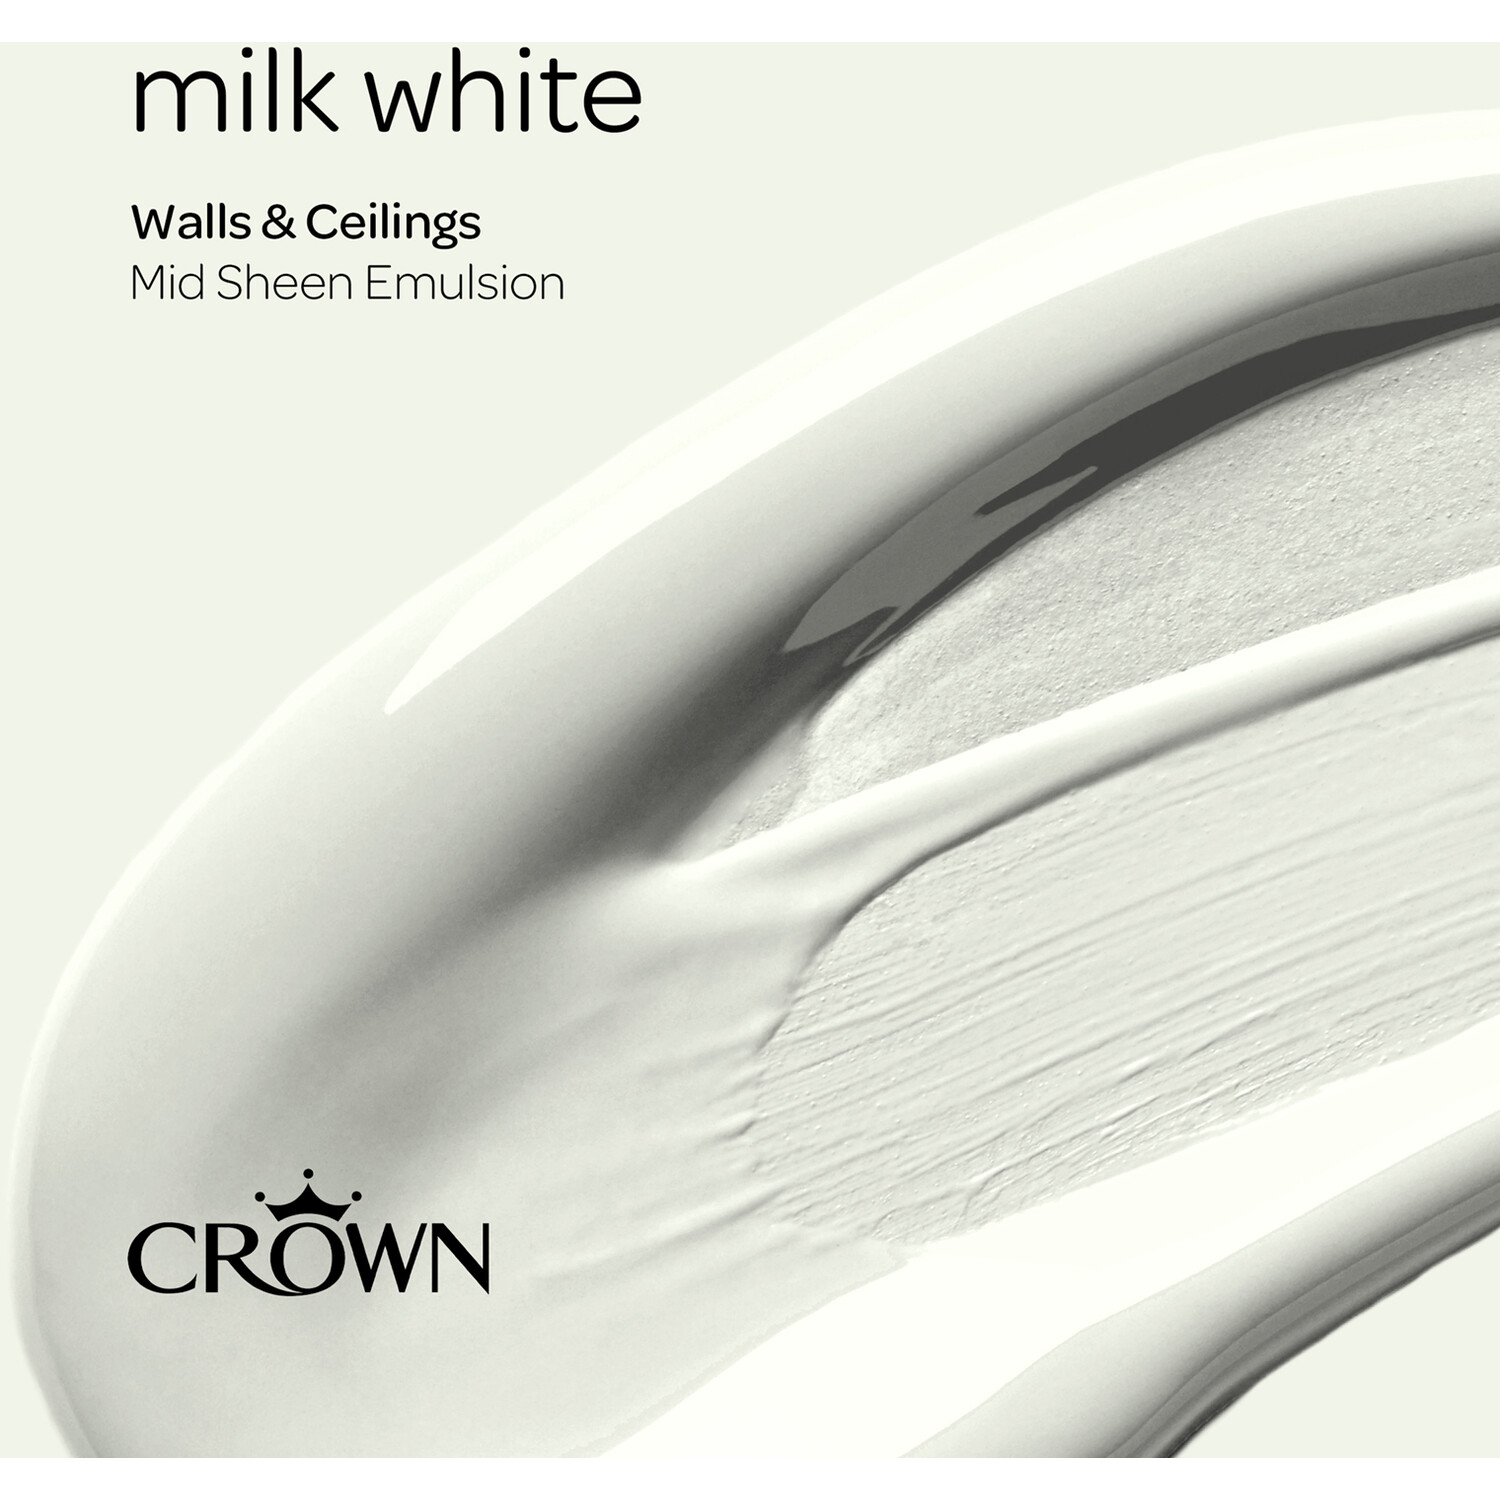 Crown Walls & Ceilings Milk White Mid Sheen Emulsion Paint 2.5L Image 4